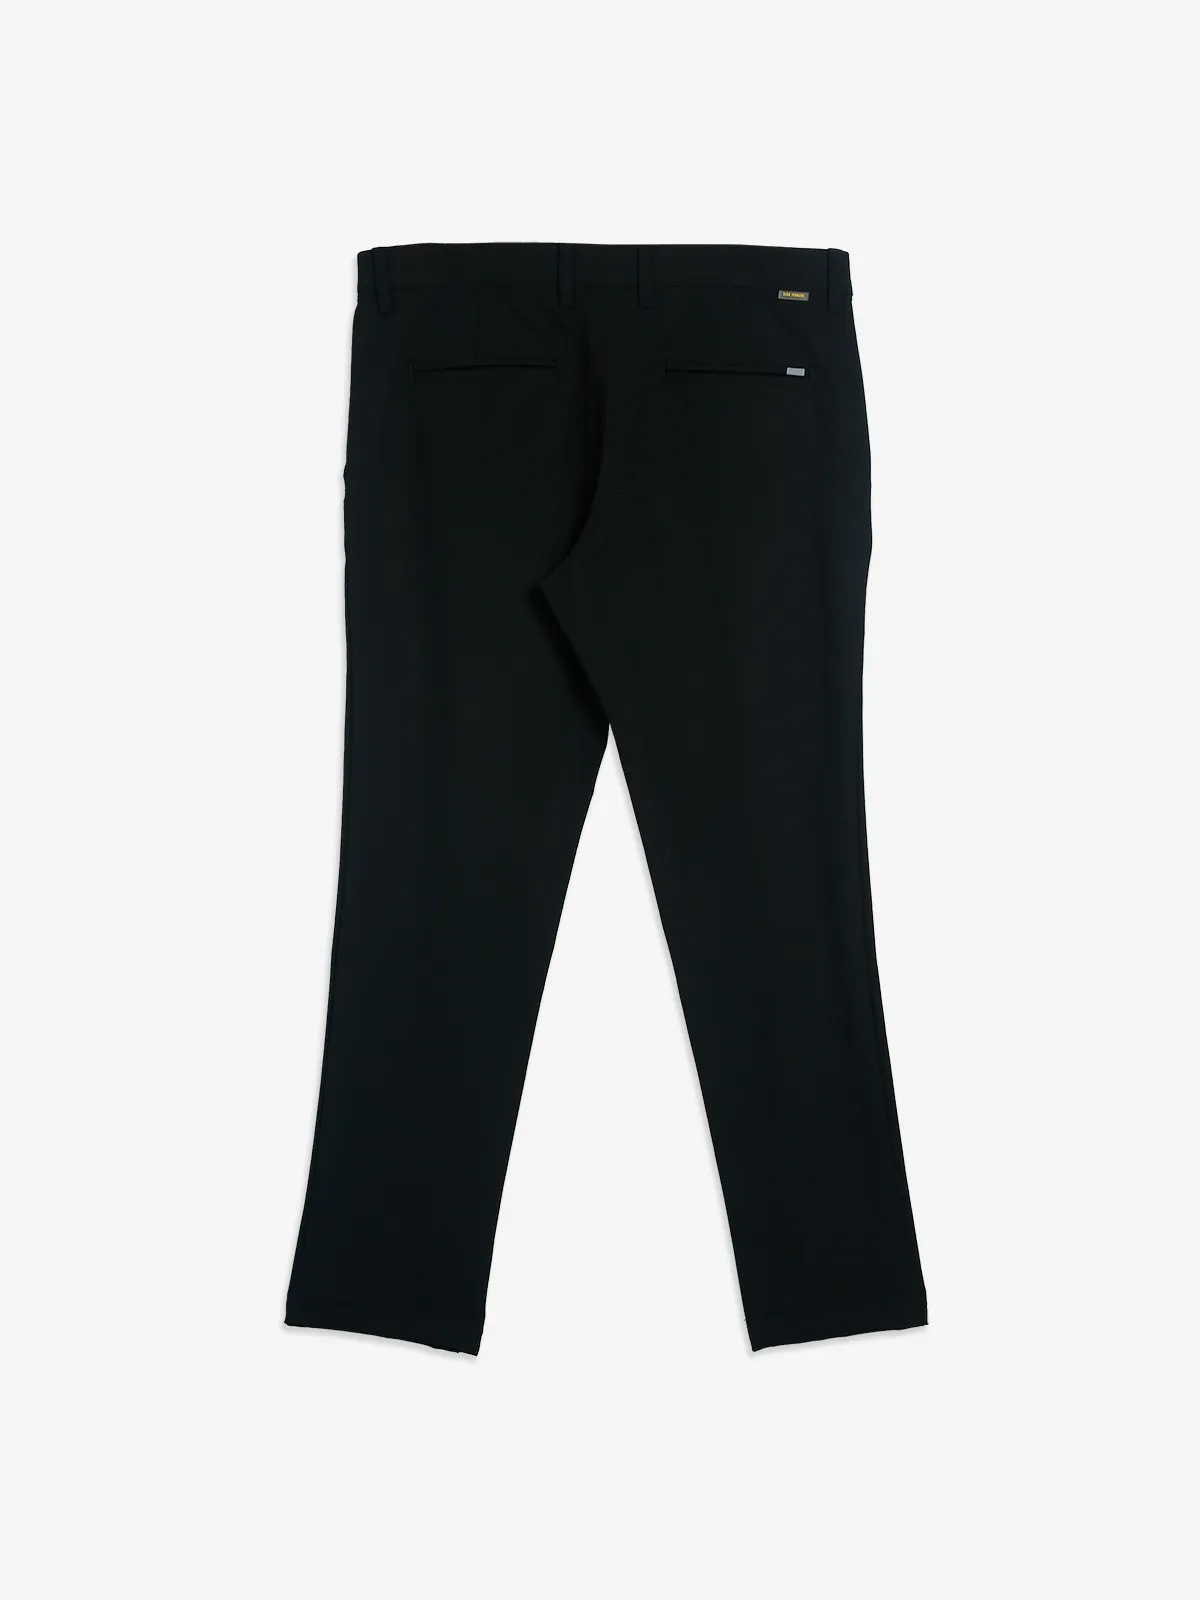 INDIAN TERRAIN solid black brooklyn fit trouser